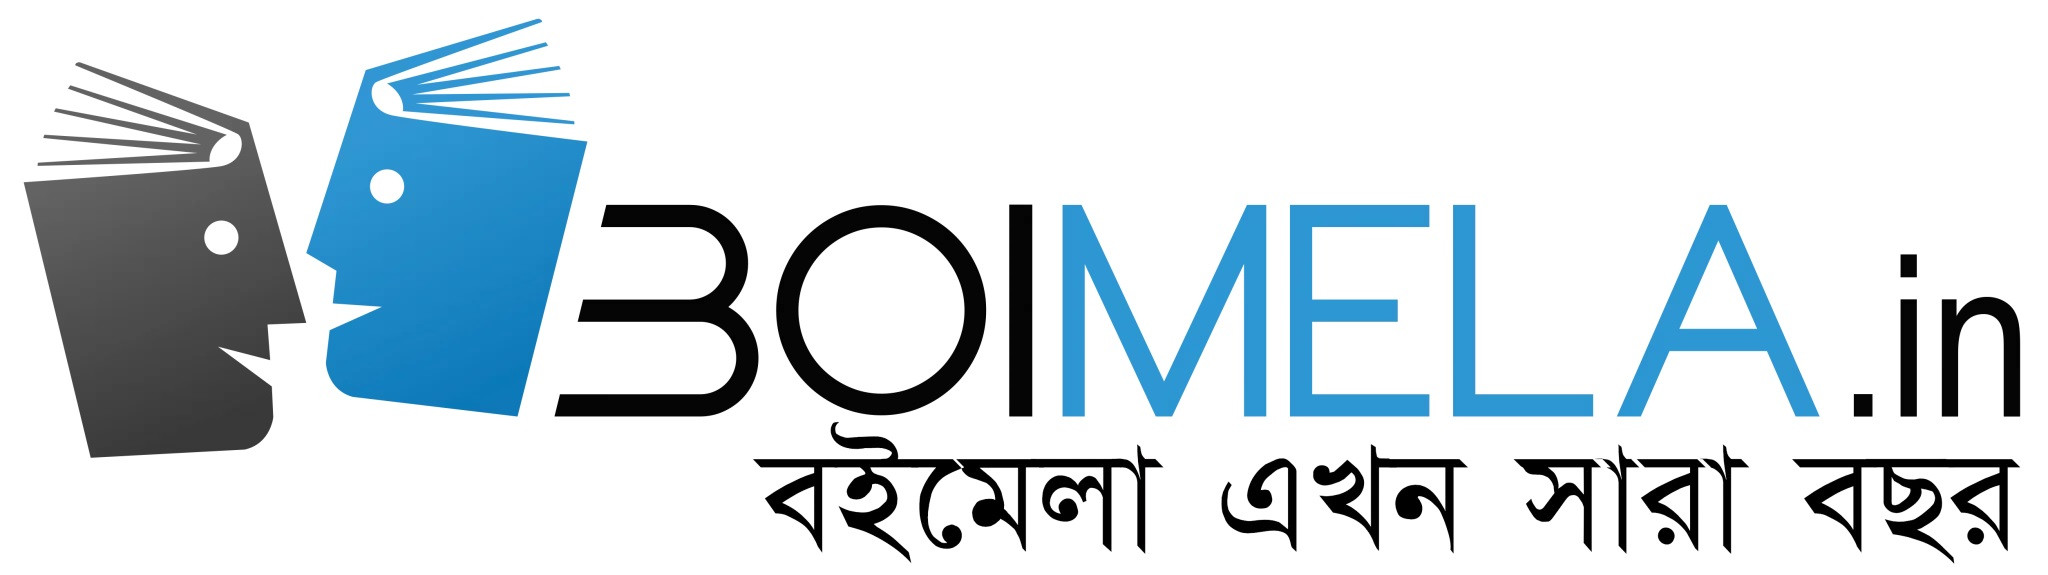 Boimela Bengali Book Store